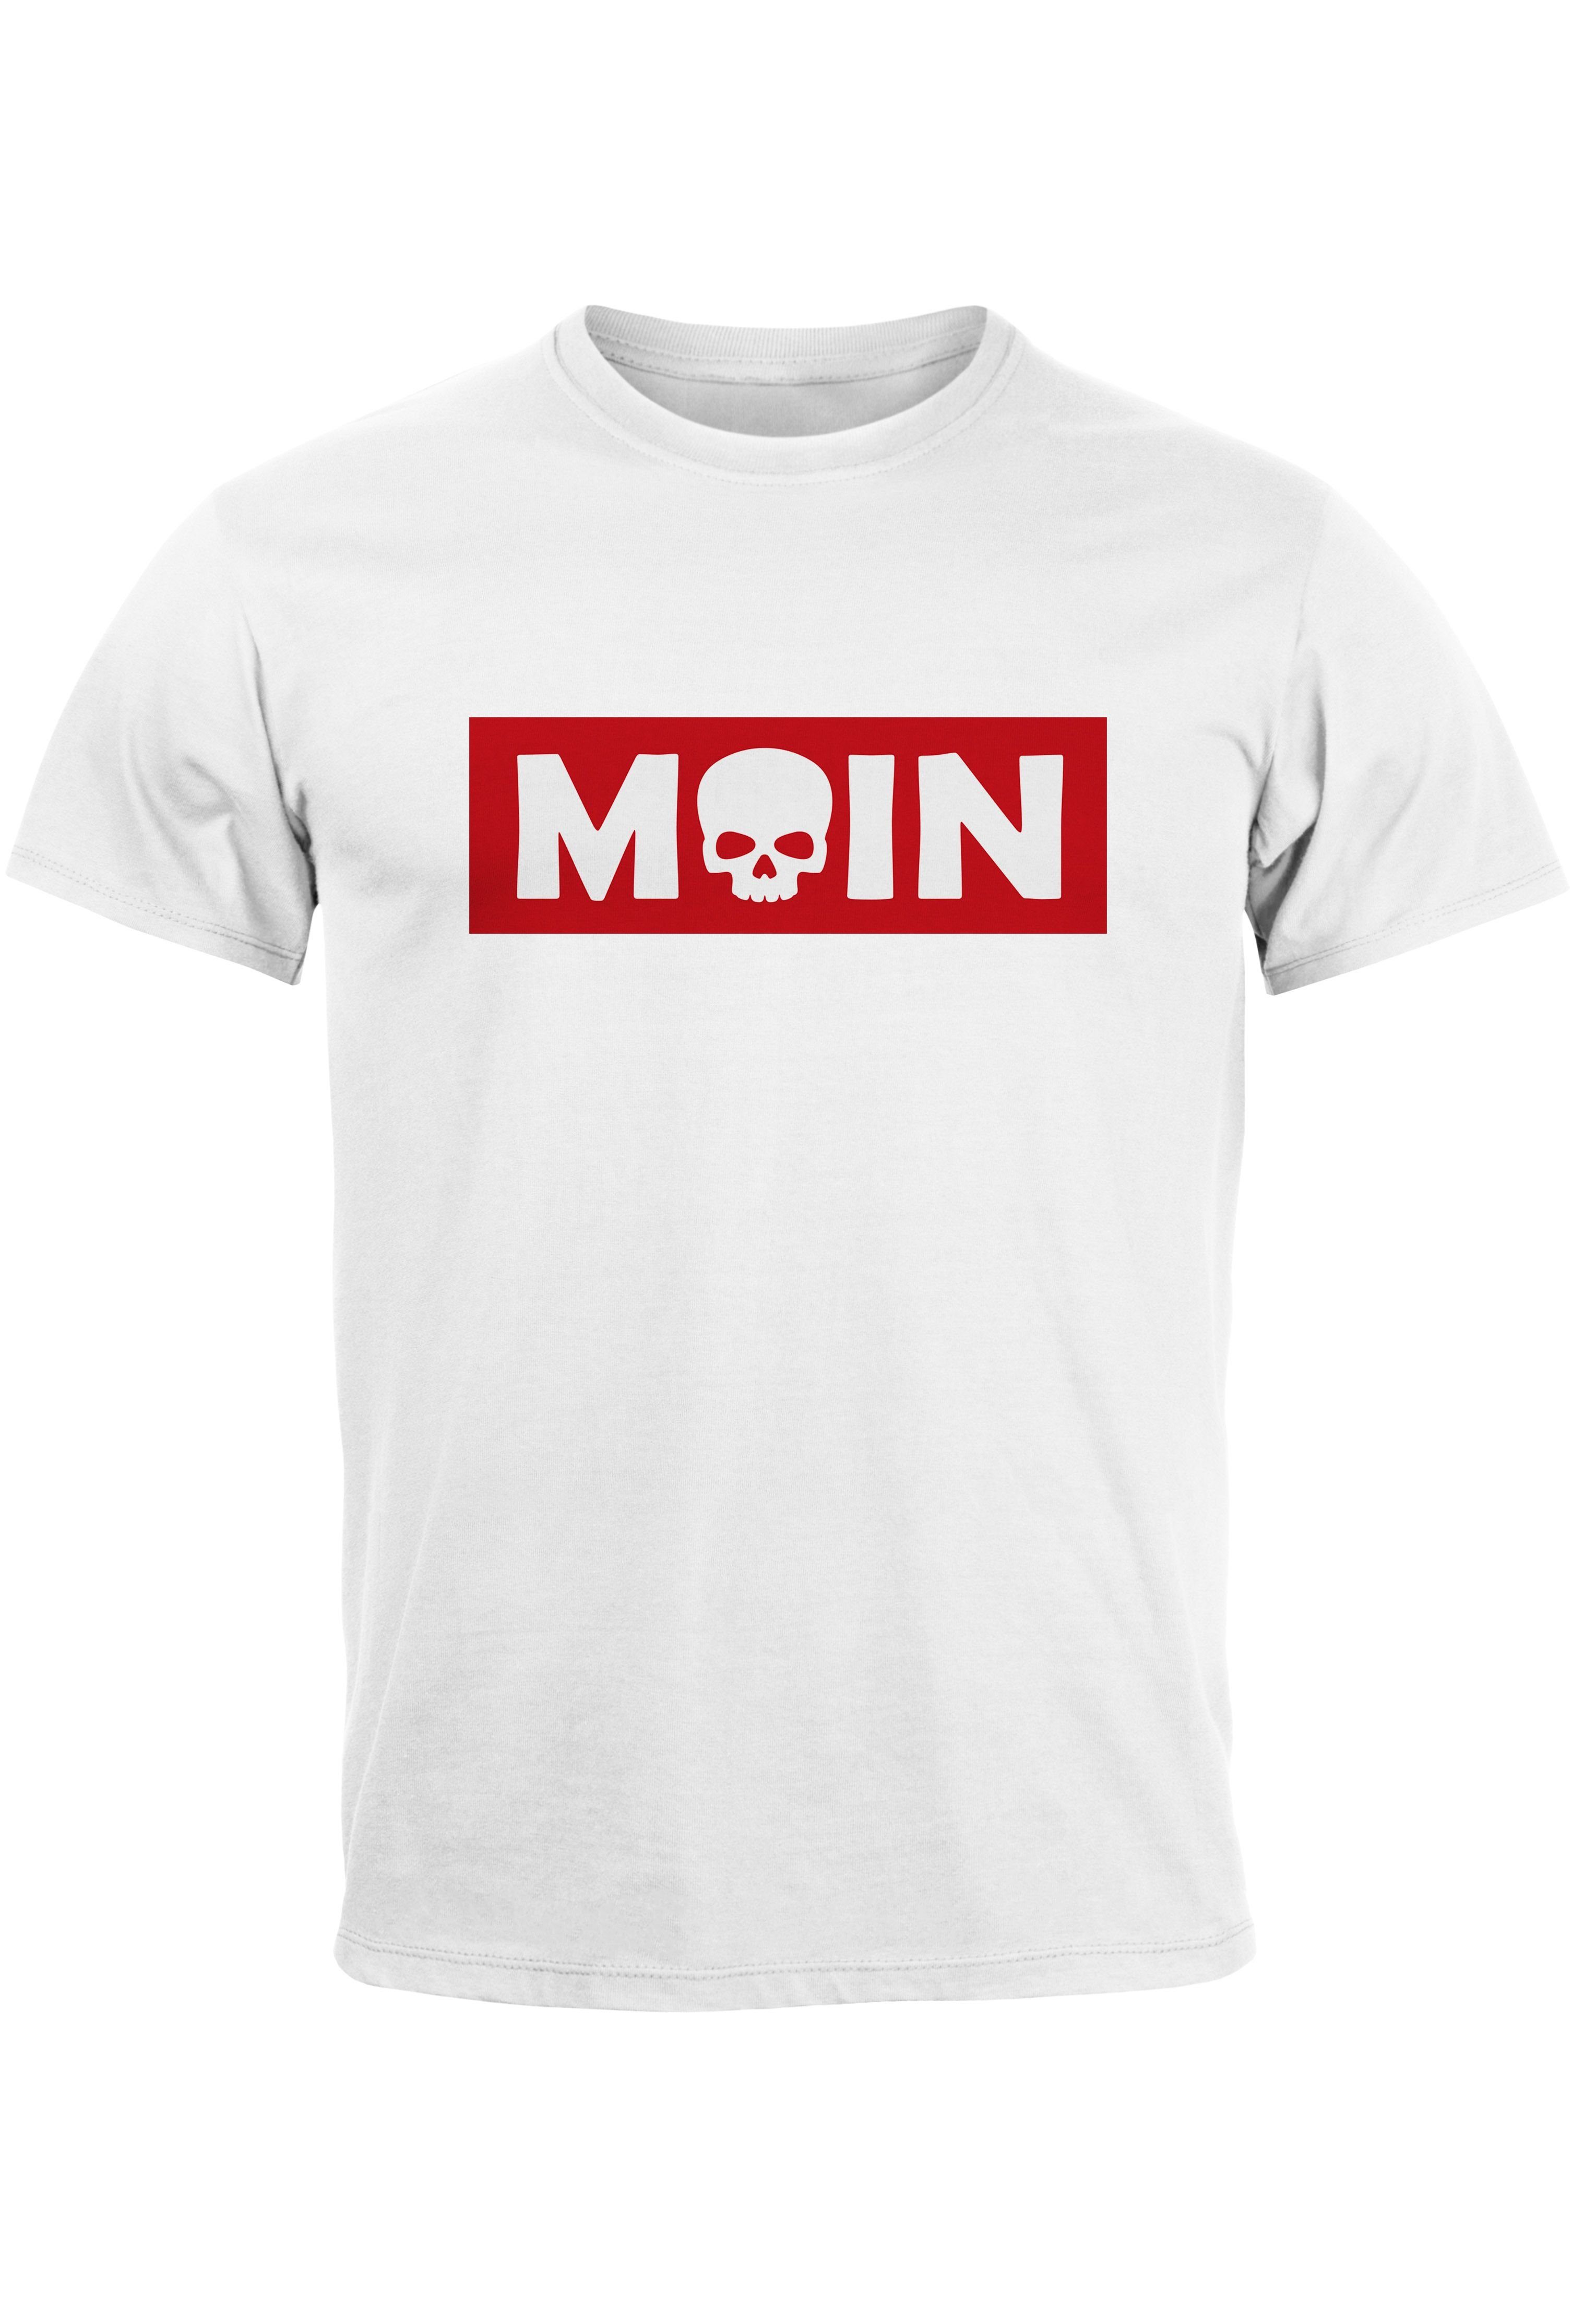 Neverless Print-Shirt Herren T-Shirt Schriftzug Parodie Print weiß Moin mit Skull Print Totenkopf Aufdruck